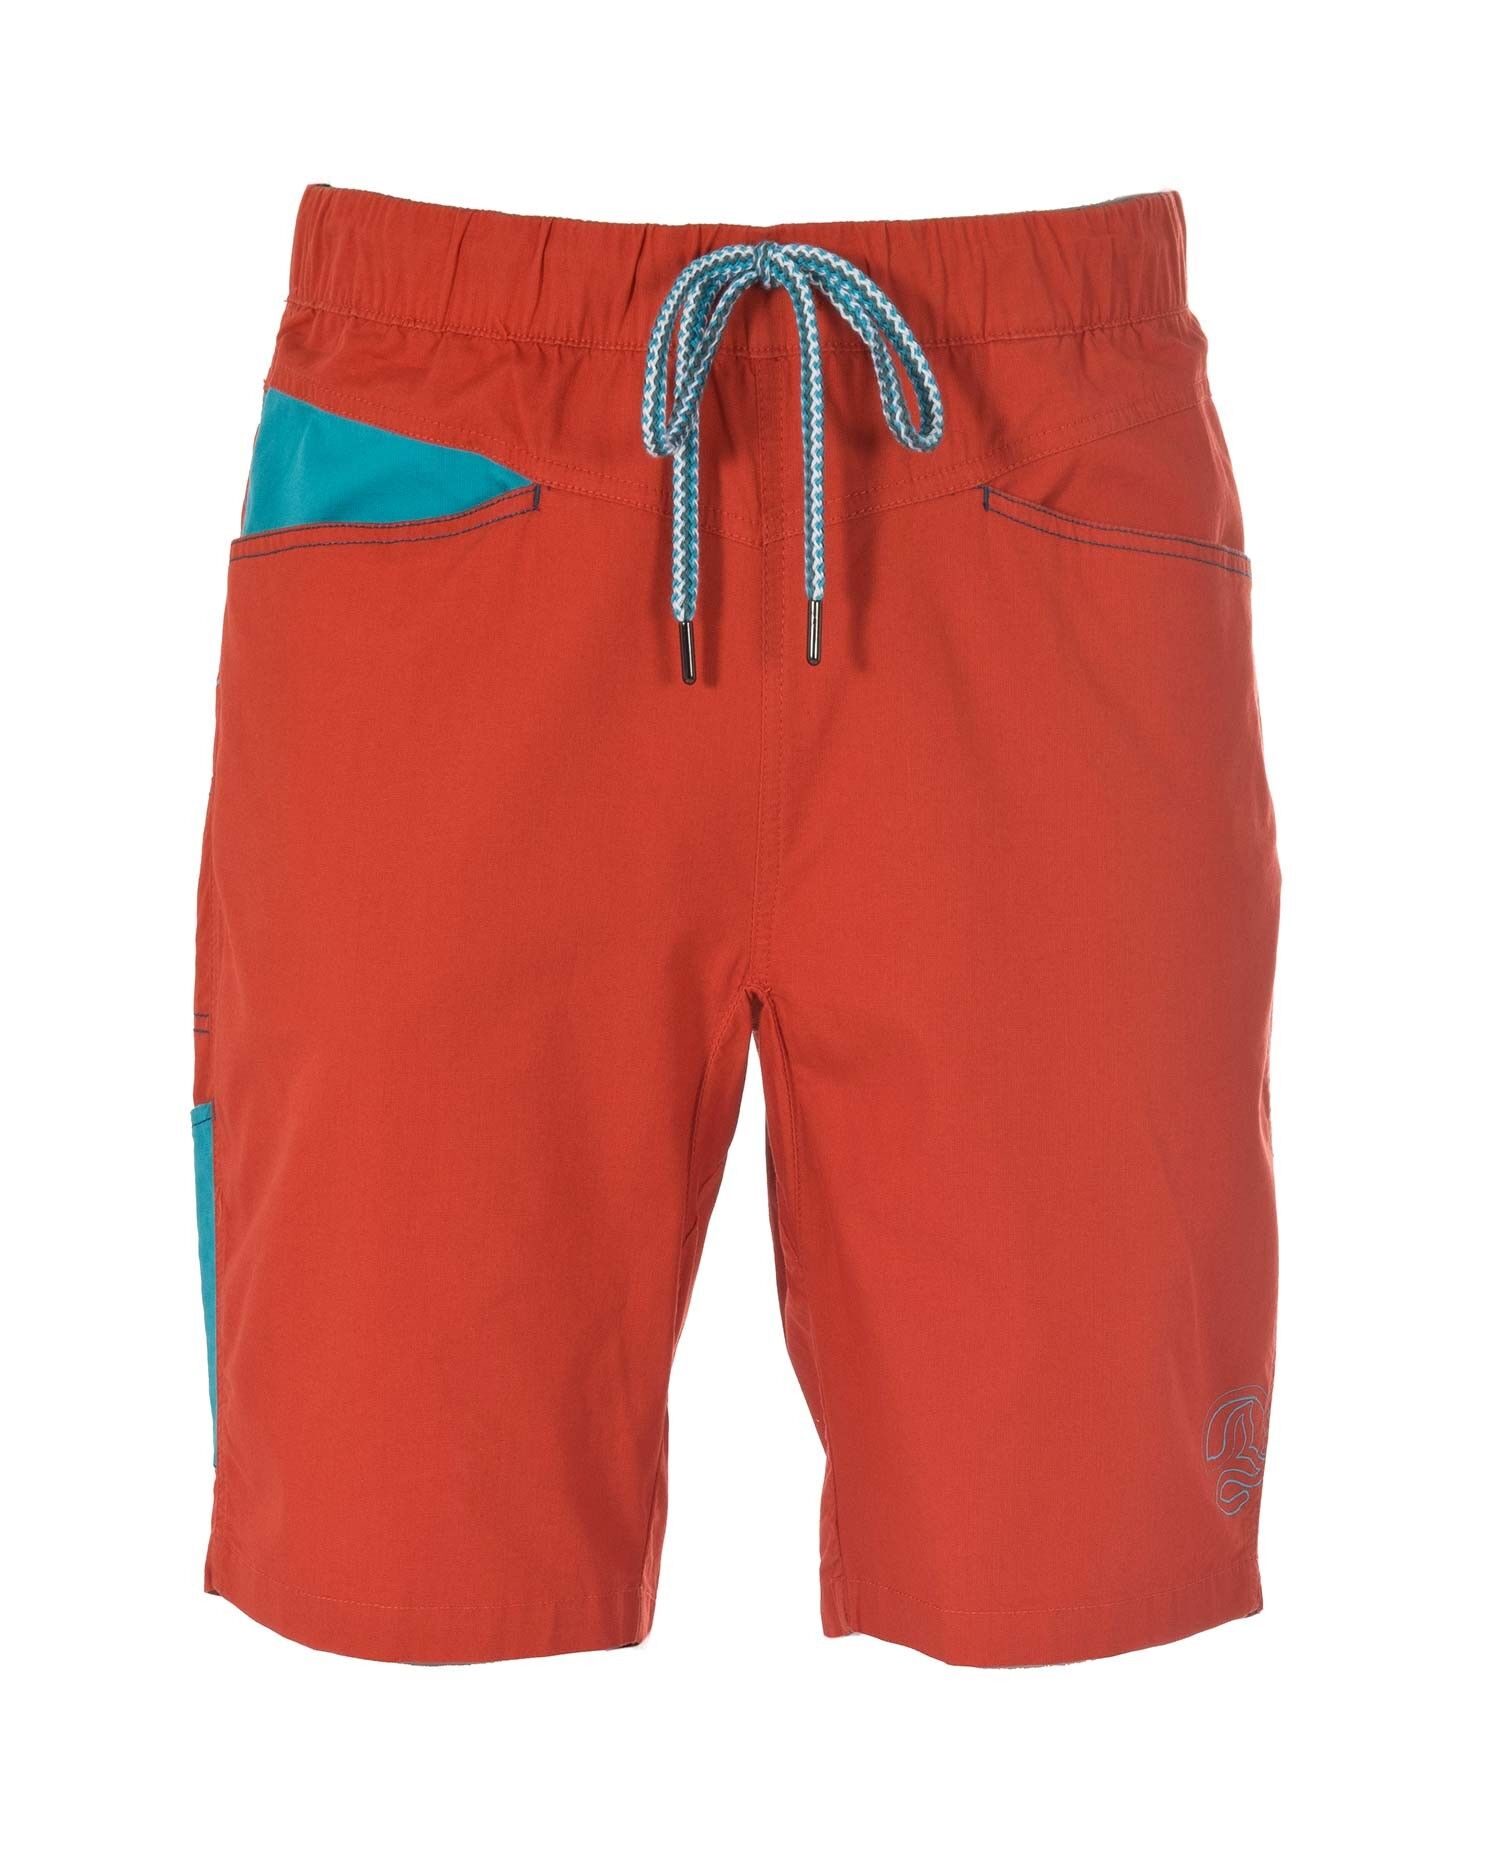 Ternua Slab Bermuda - Climbing shorts - Men's